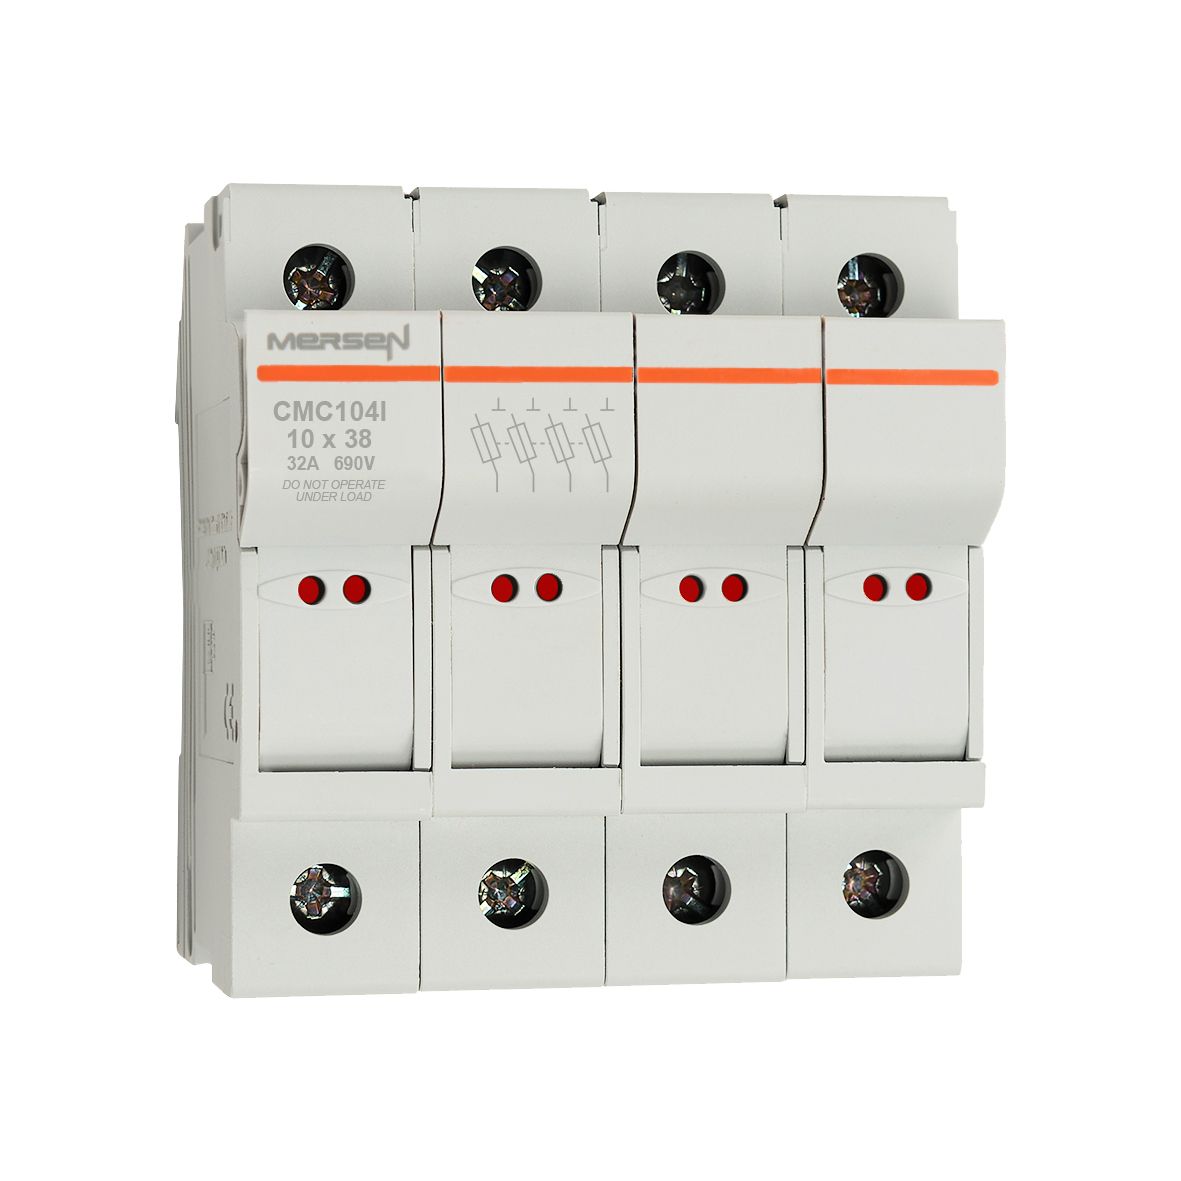 B1062693 - modular fuse holder, IEC, 4P, indicator light, 10x38, DIN rail mounting, IP20